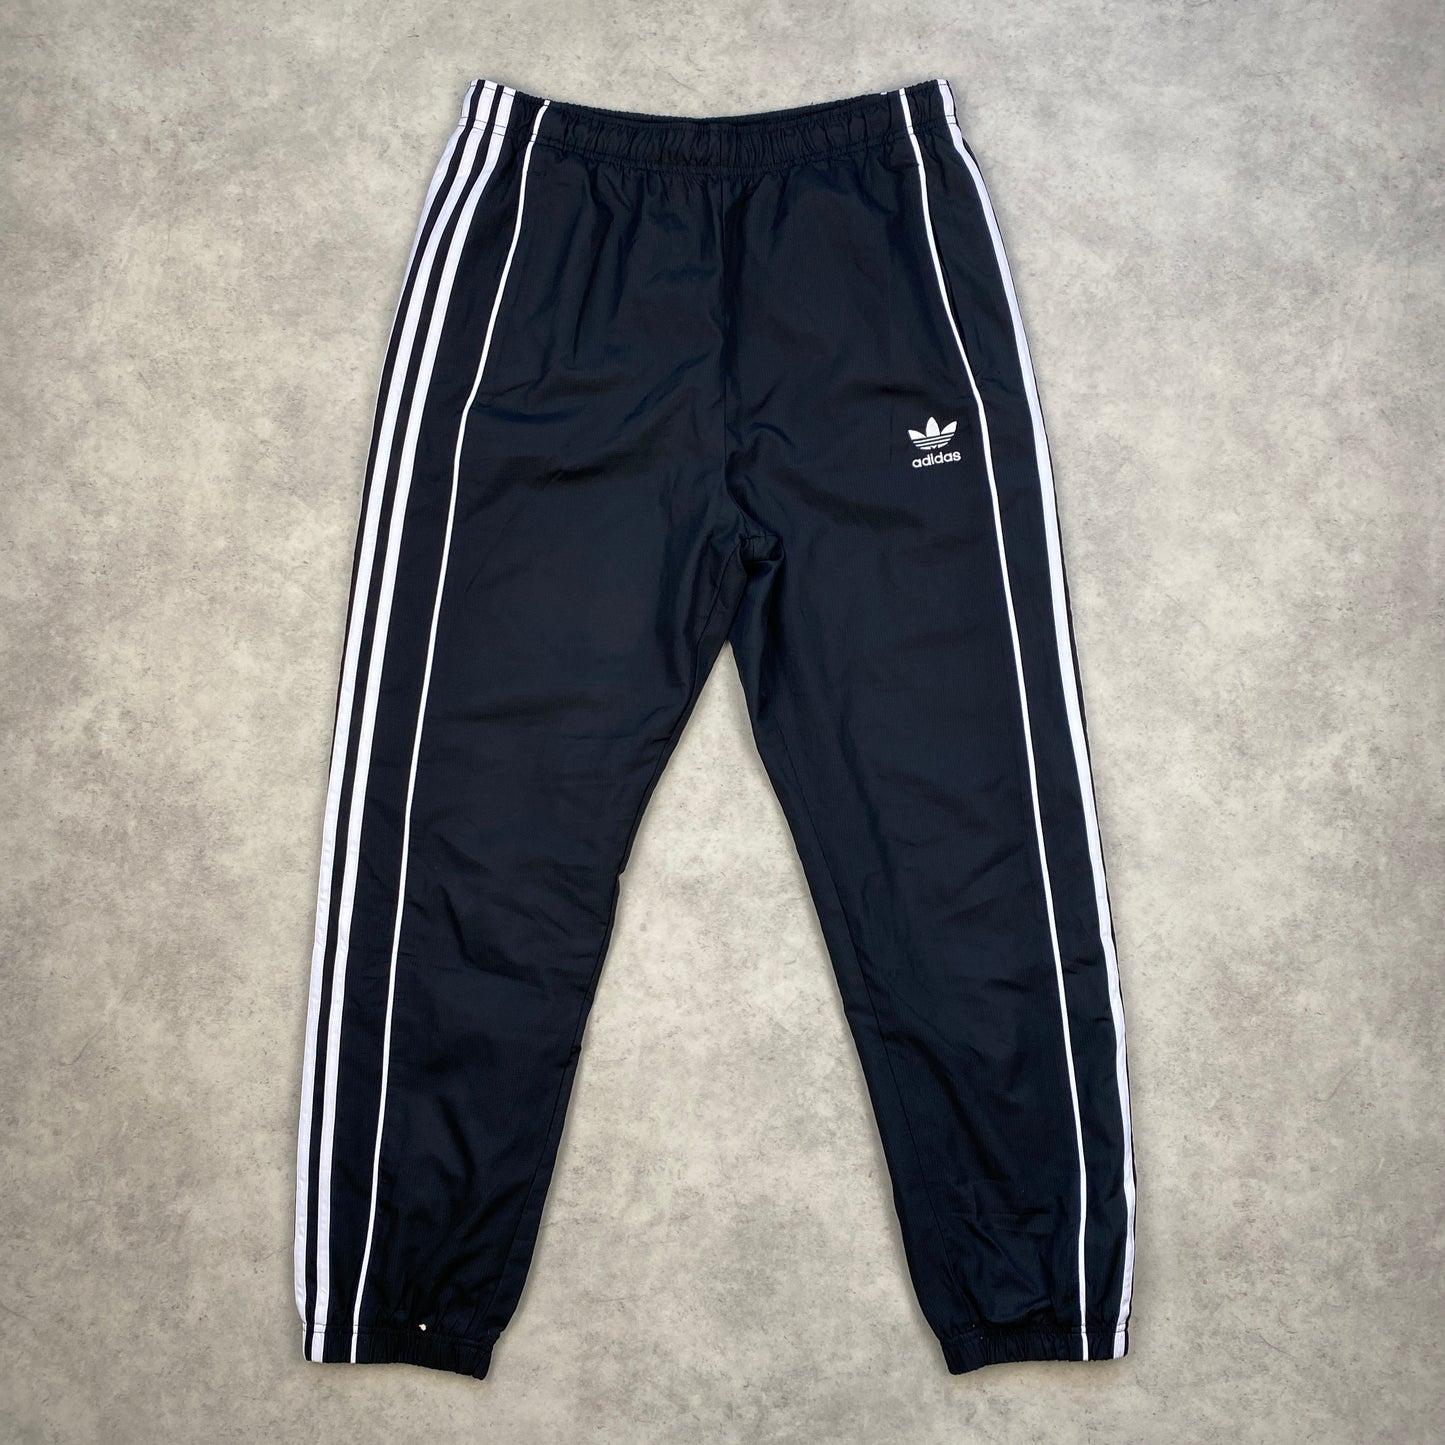 Adidas track pants (M)